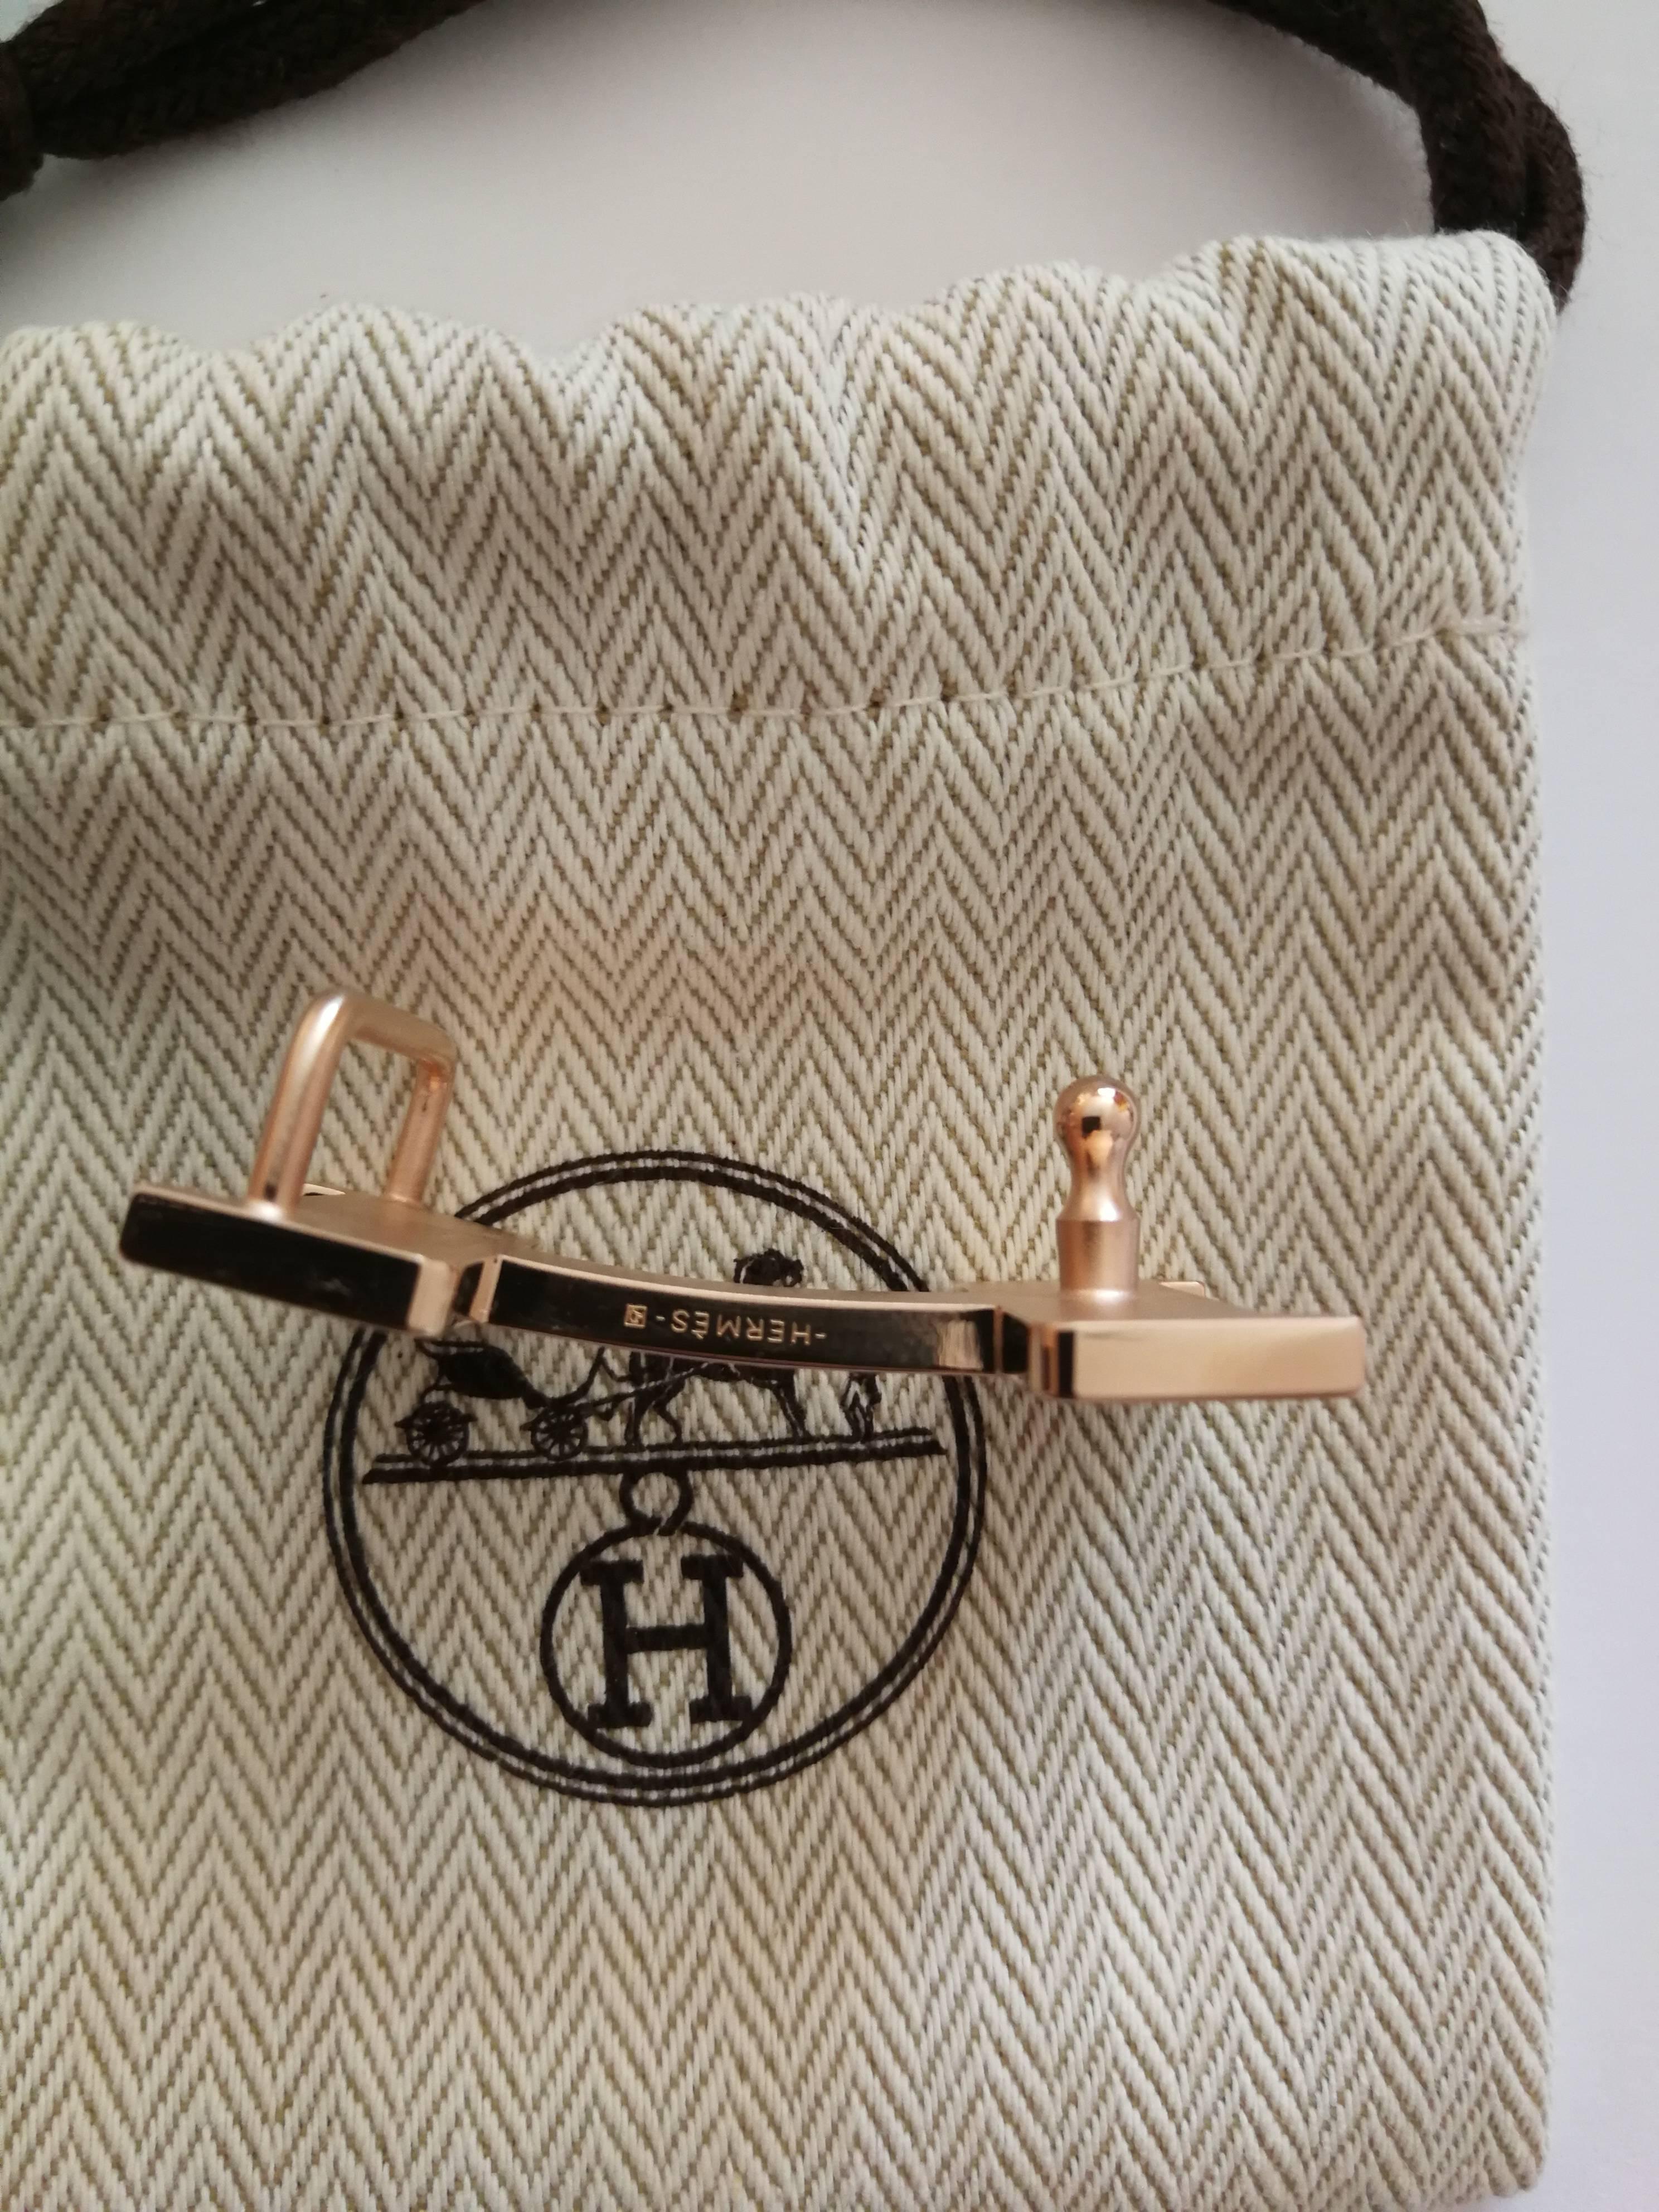 Rare Hermès Mini Constance H Buckle for strap 2.4 cm PinK Gold / Good Condition 4